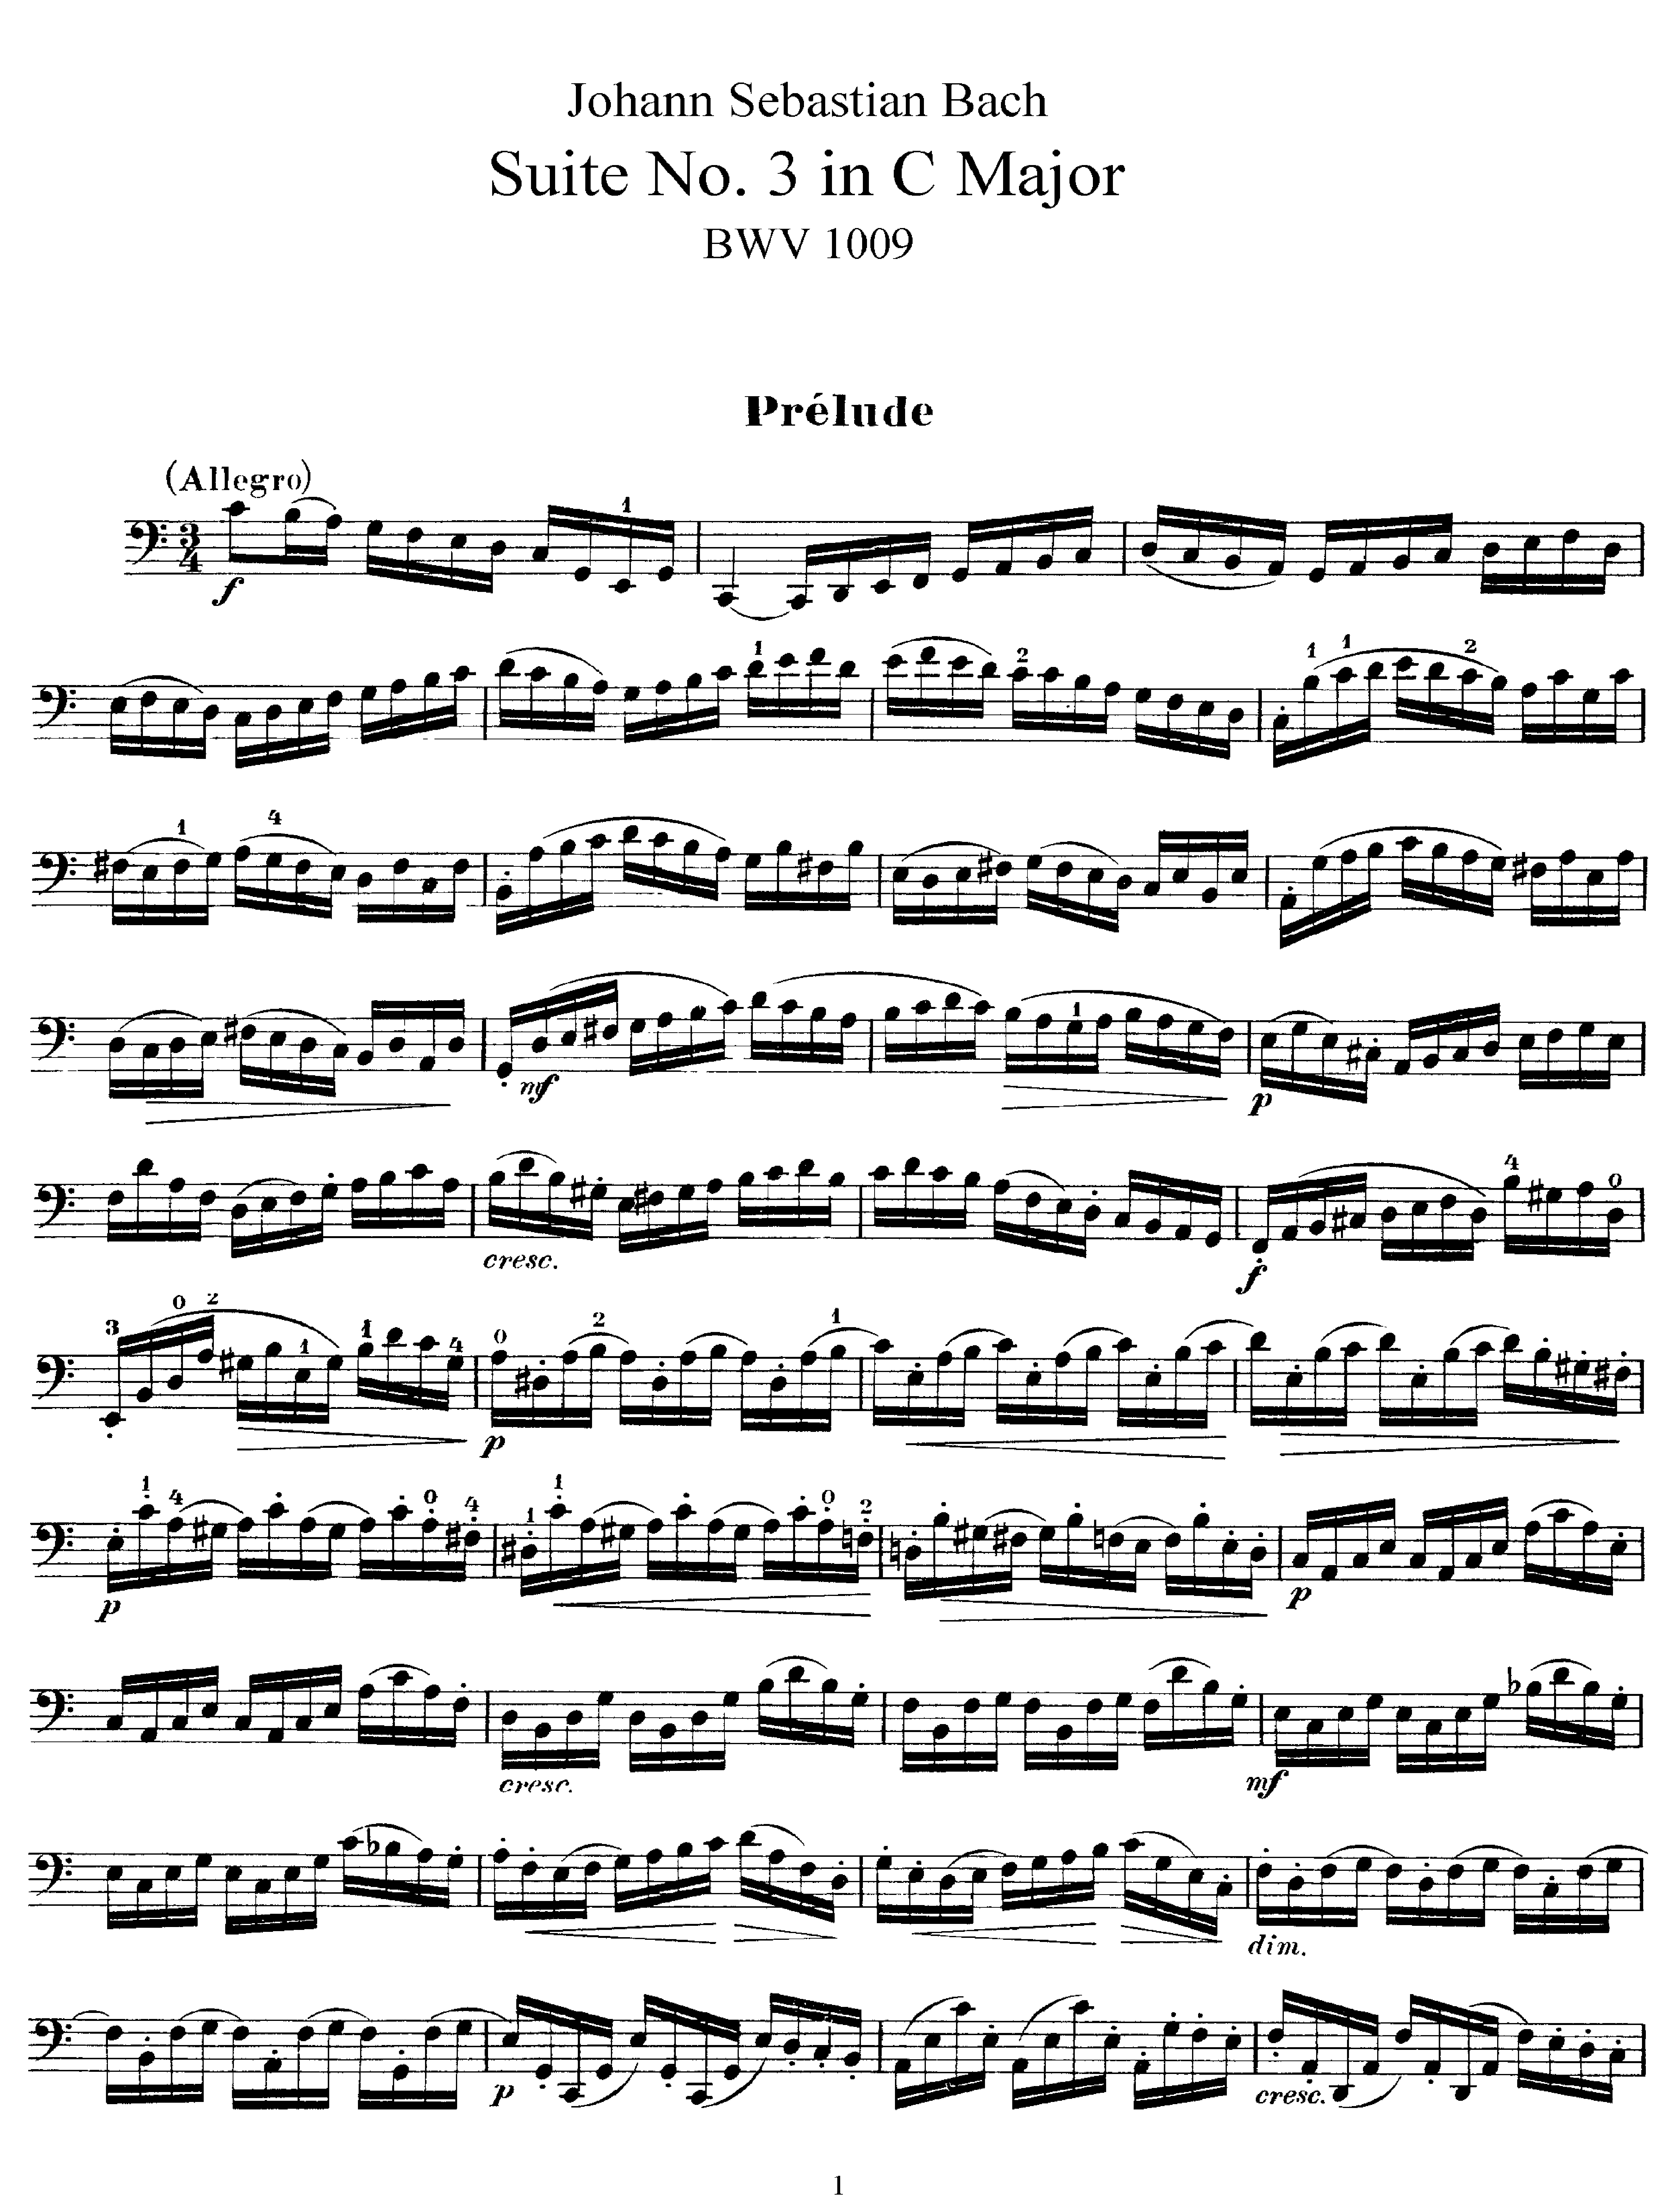 Concentration pen Unite Bach, Johann Sebastian - Cello Suite No.3 in C major, BWV 1009 (Complete)  Sheet music for Cello - 8notes.com